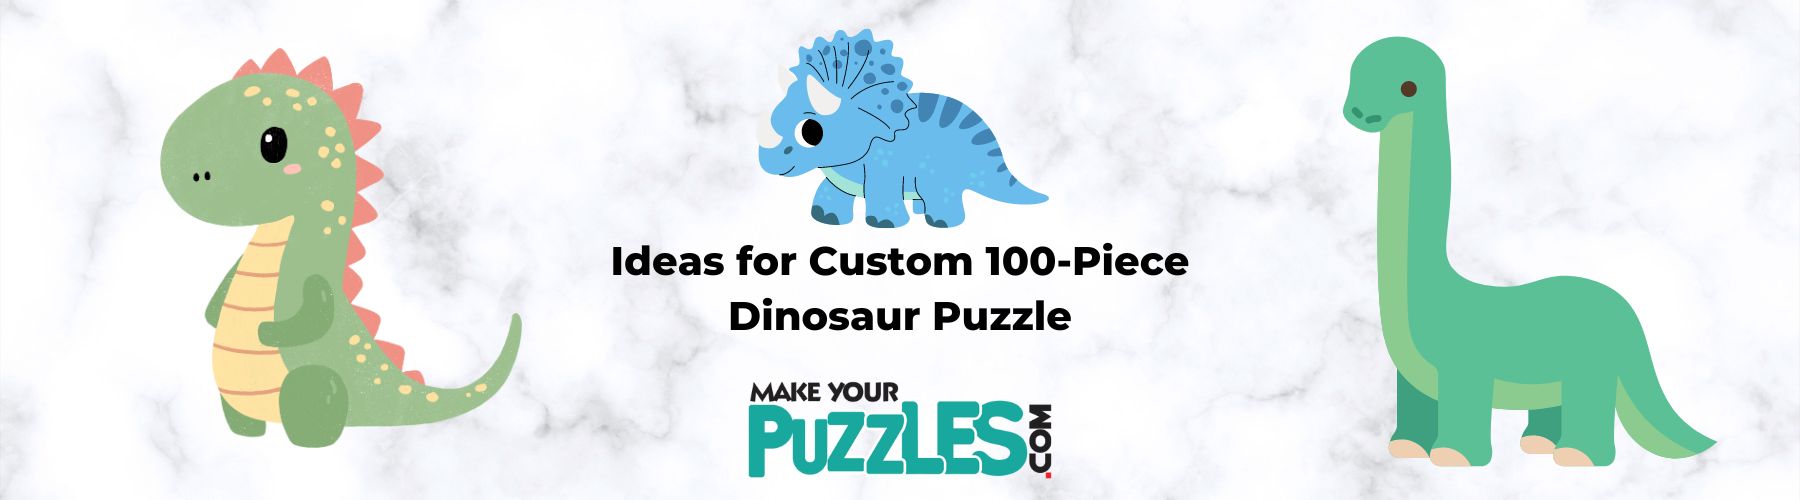 Ideas for Custom 100-Piece Dinosaur Puzzle